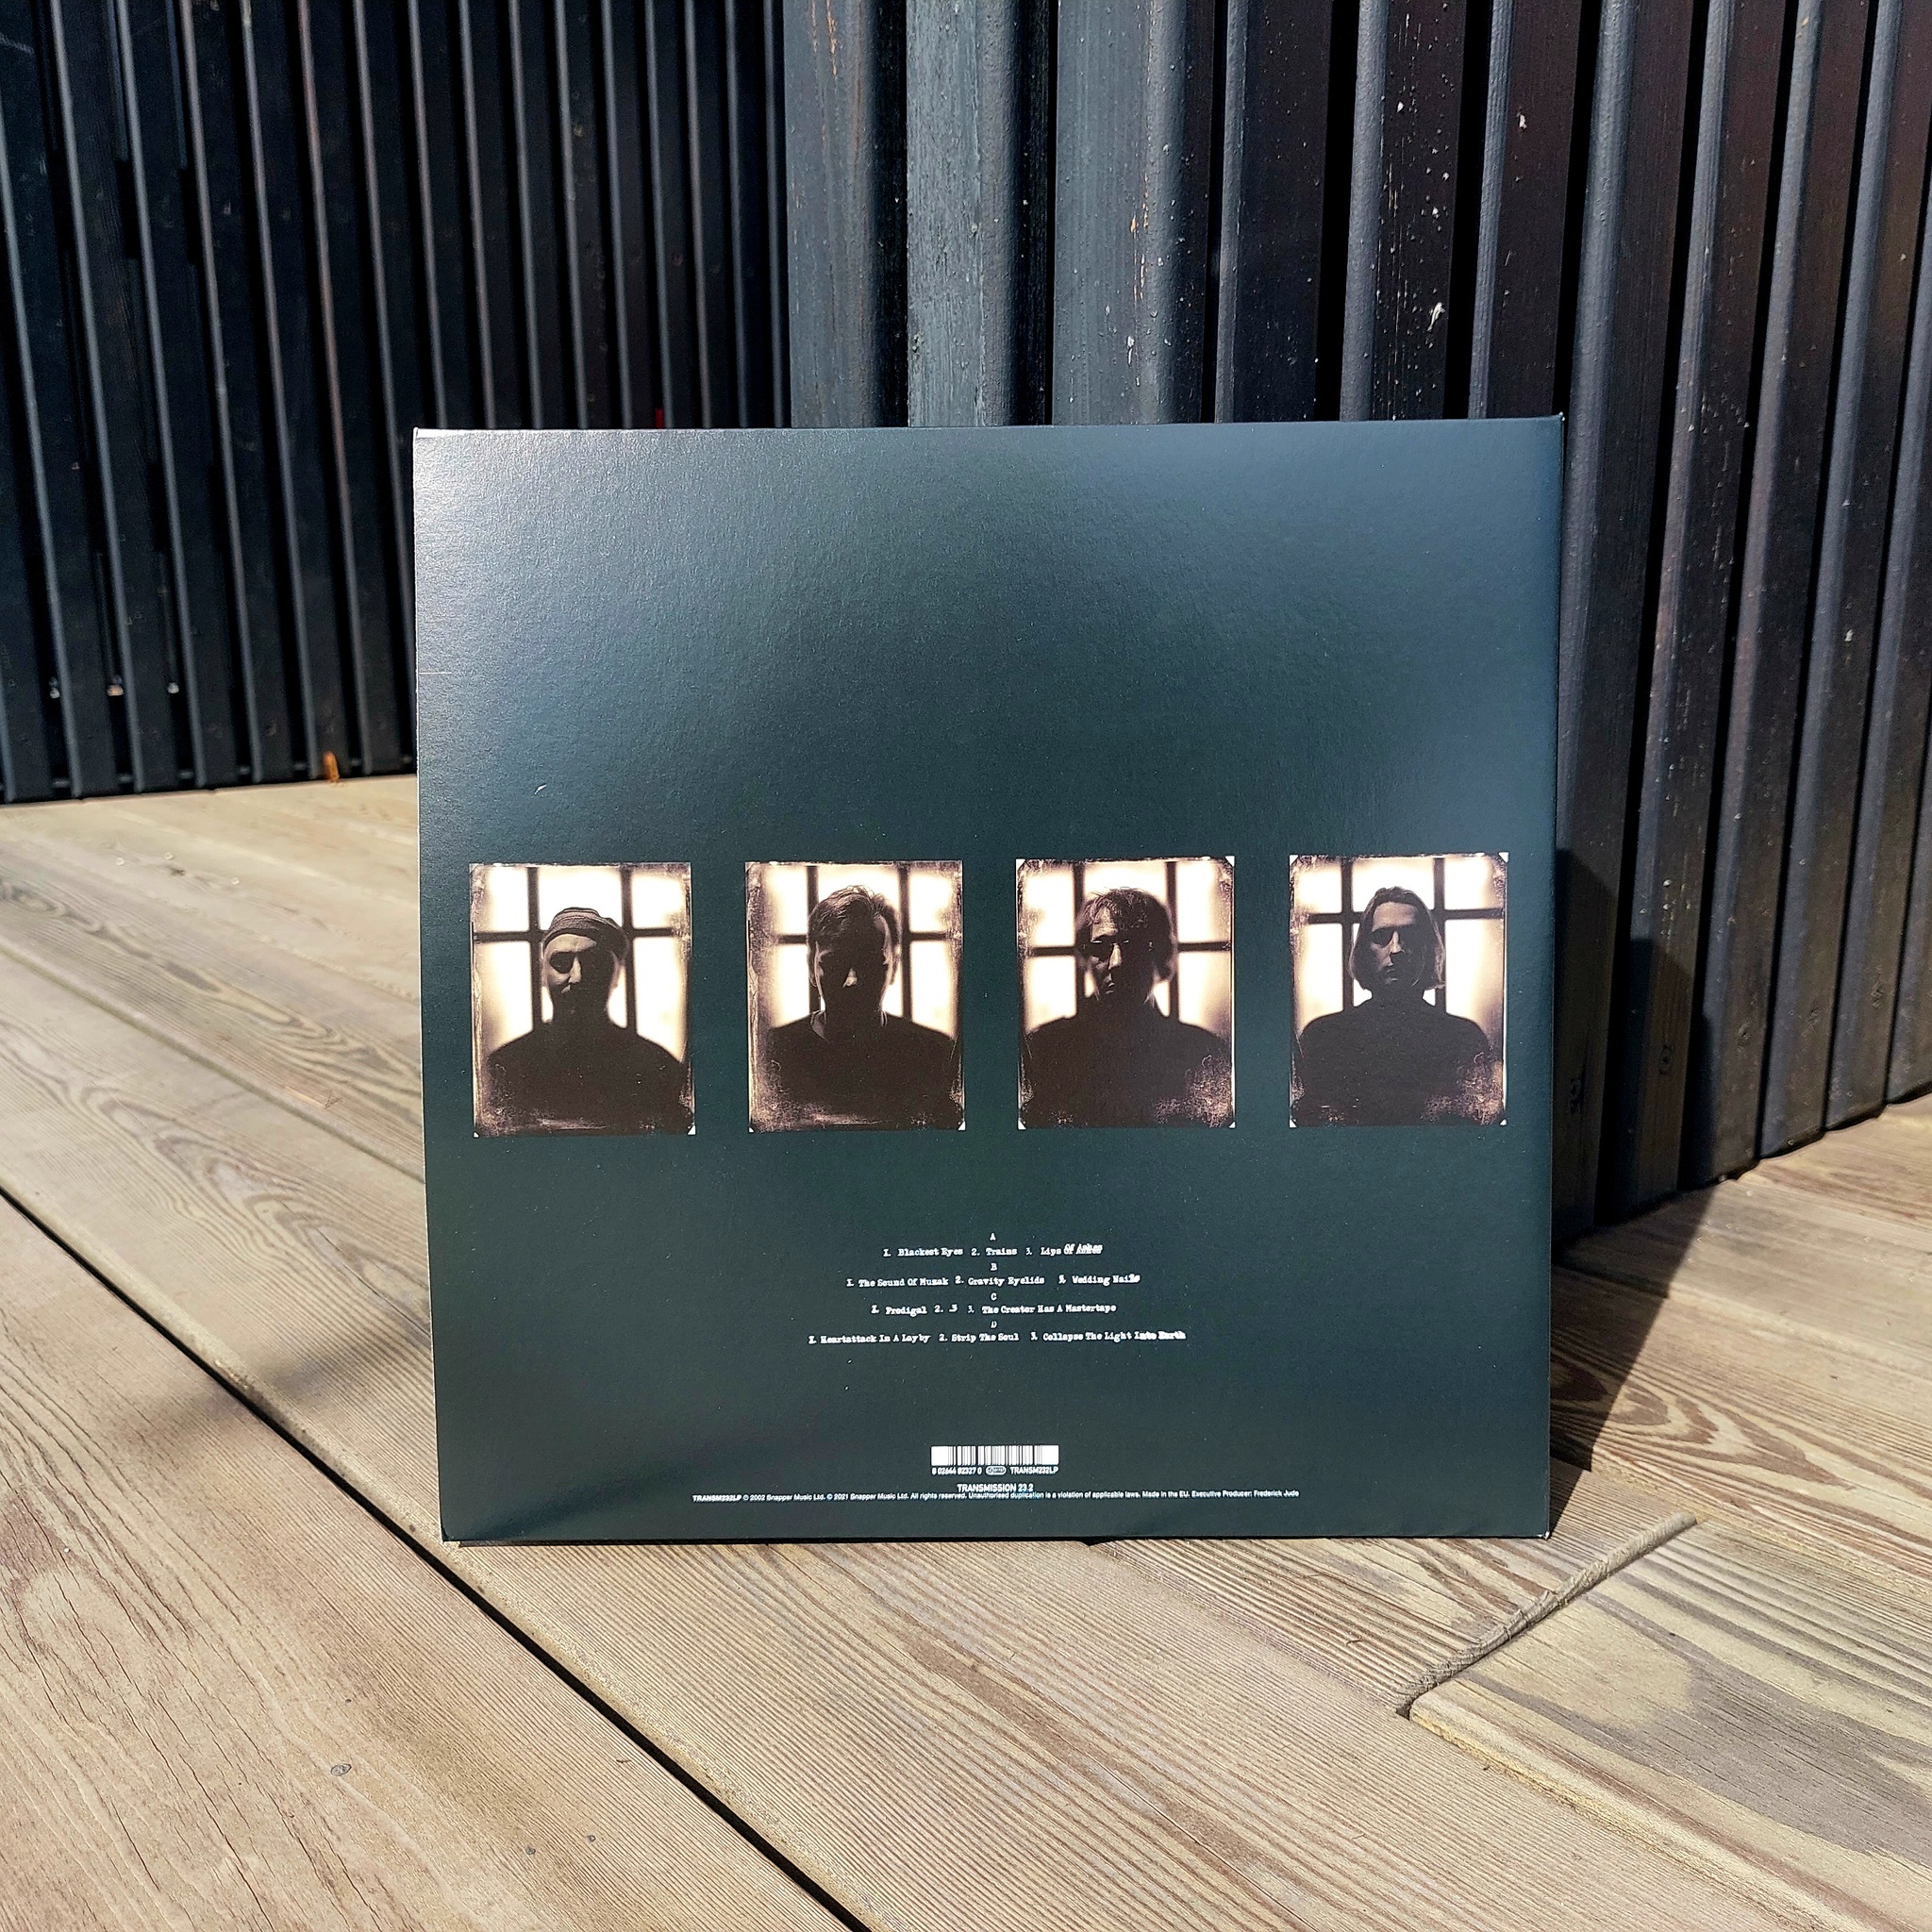 Porcupine Tree - In Absentia - Porcupine Tree, Steven Wilson, Vinyl, Vinyl records, Mobile photography, Longpost